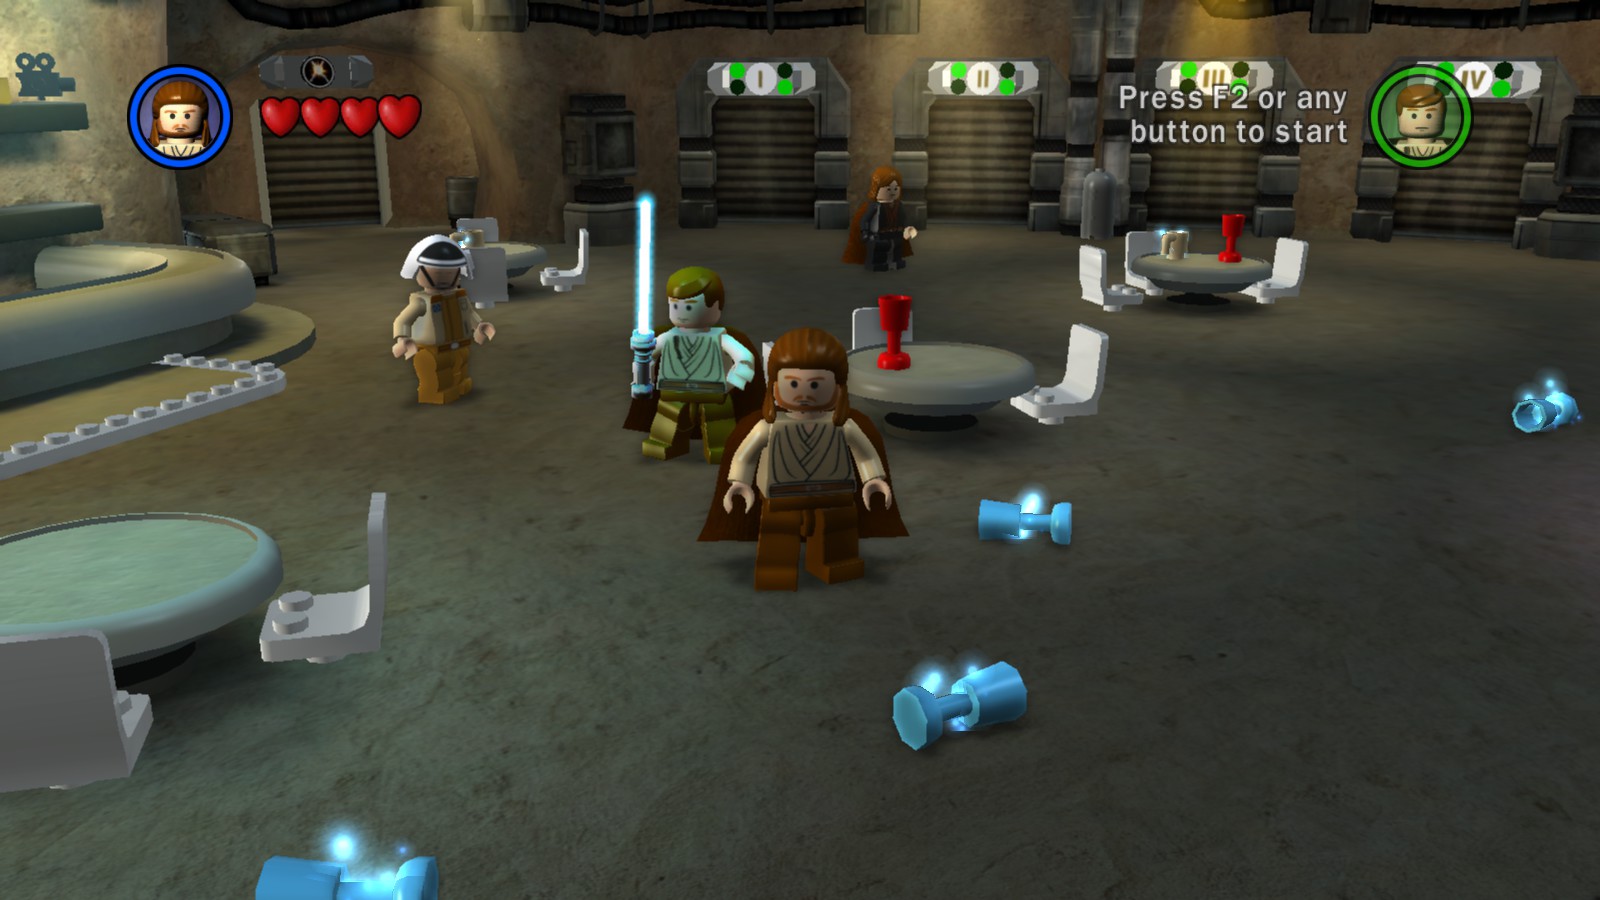 Lego Star Wars 3: The complete Saga cheat codes!